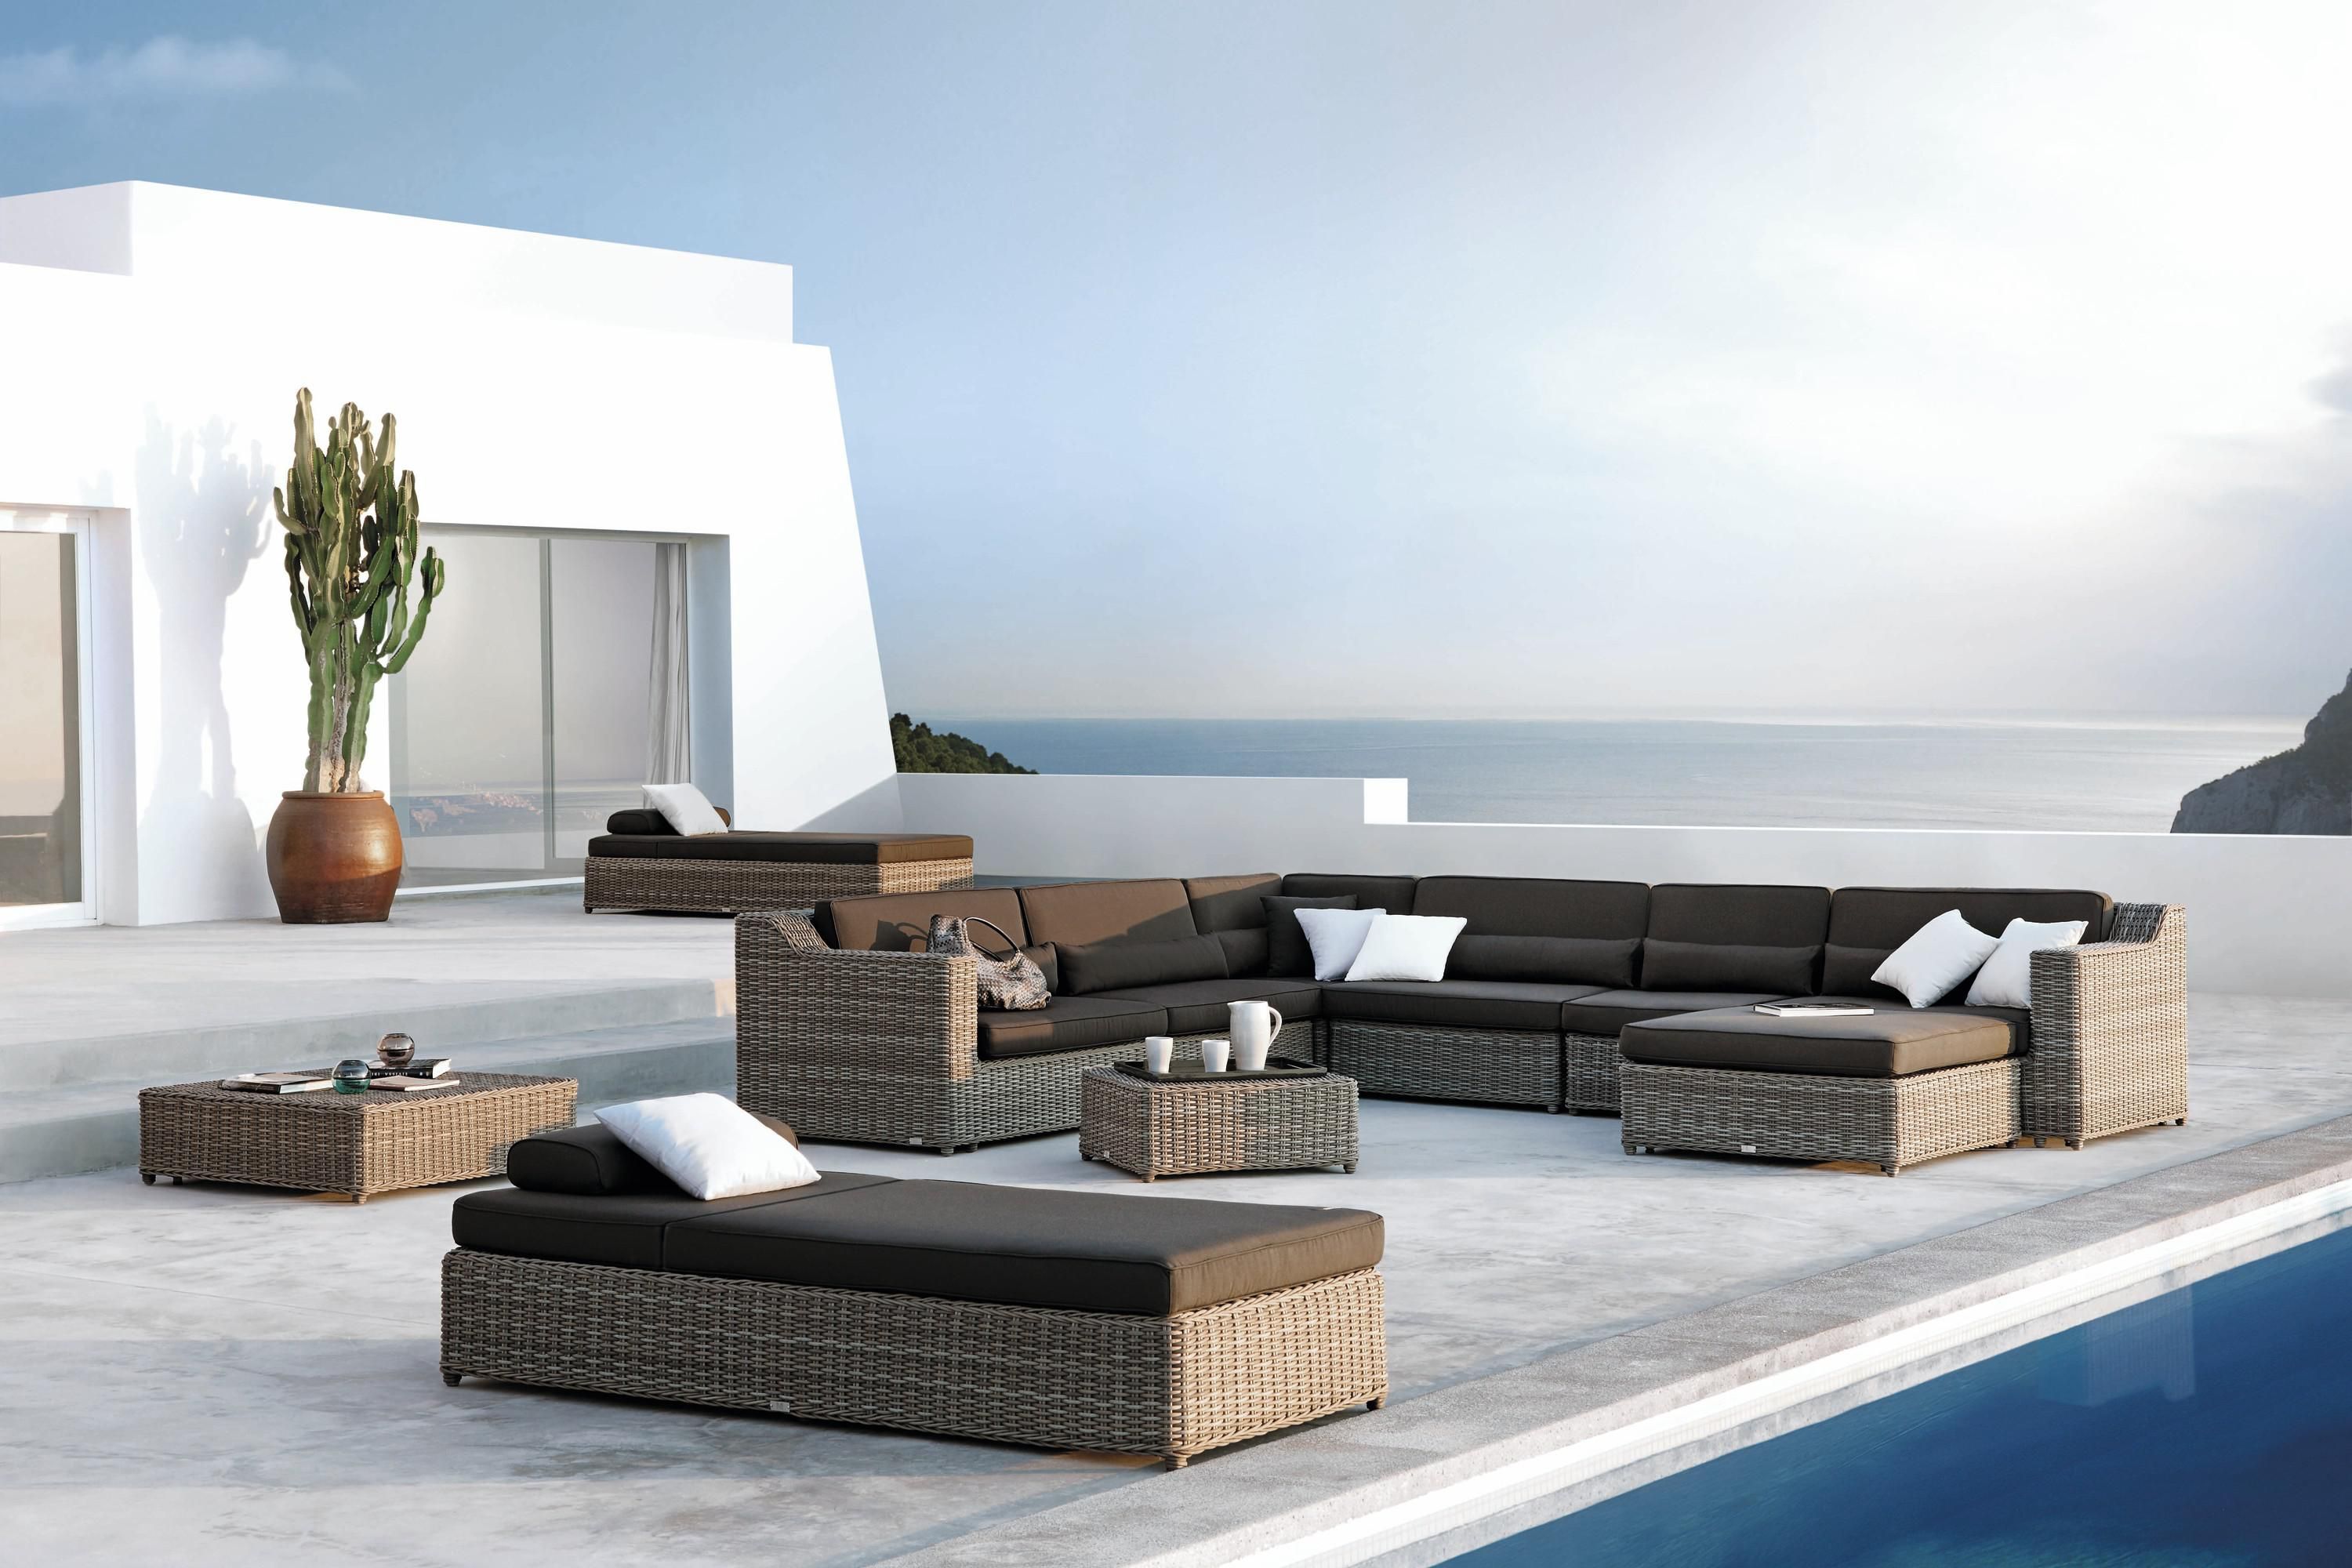 Corner modular sofa SAN DIEGO by Manutti